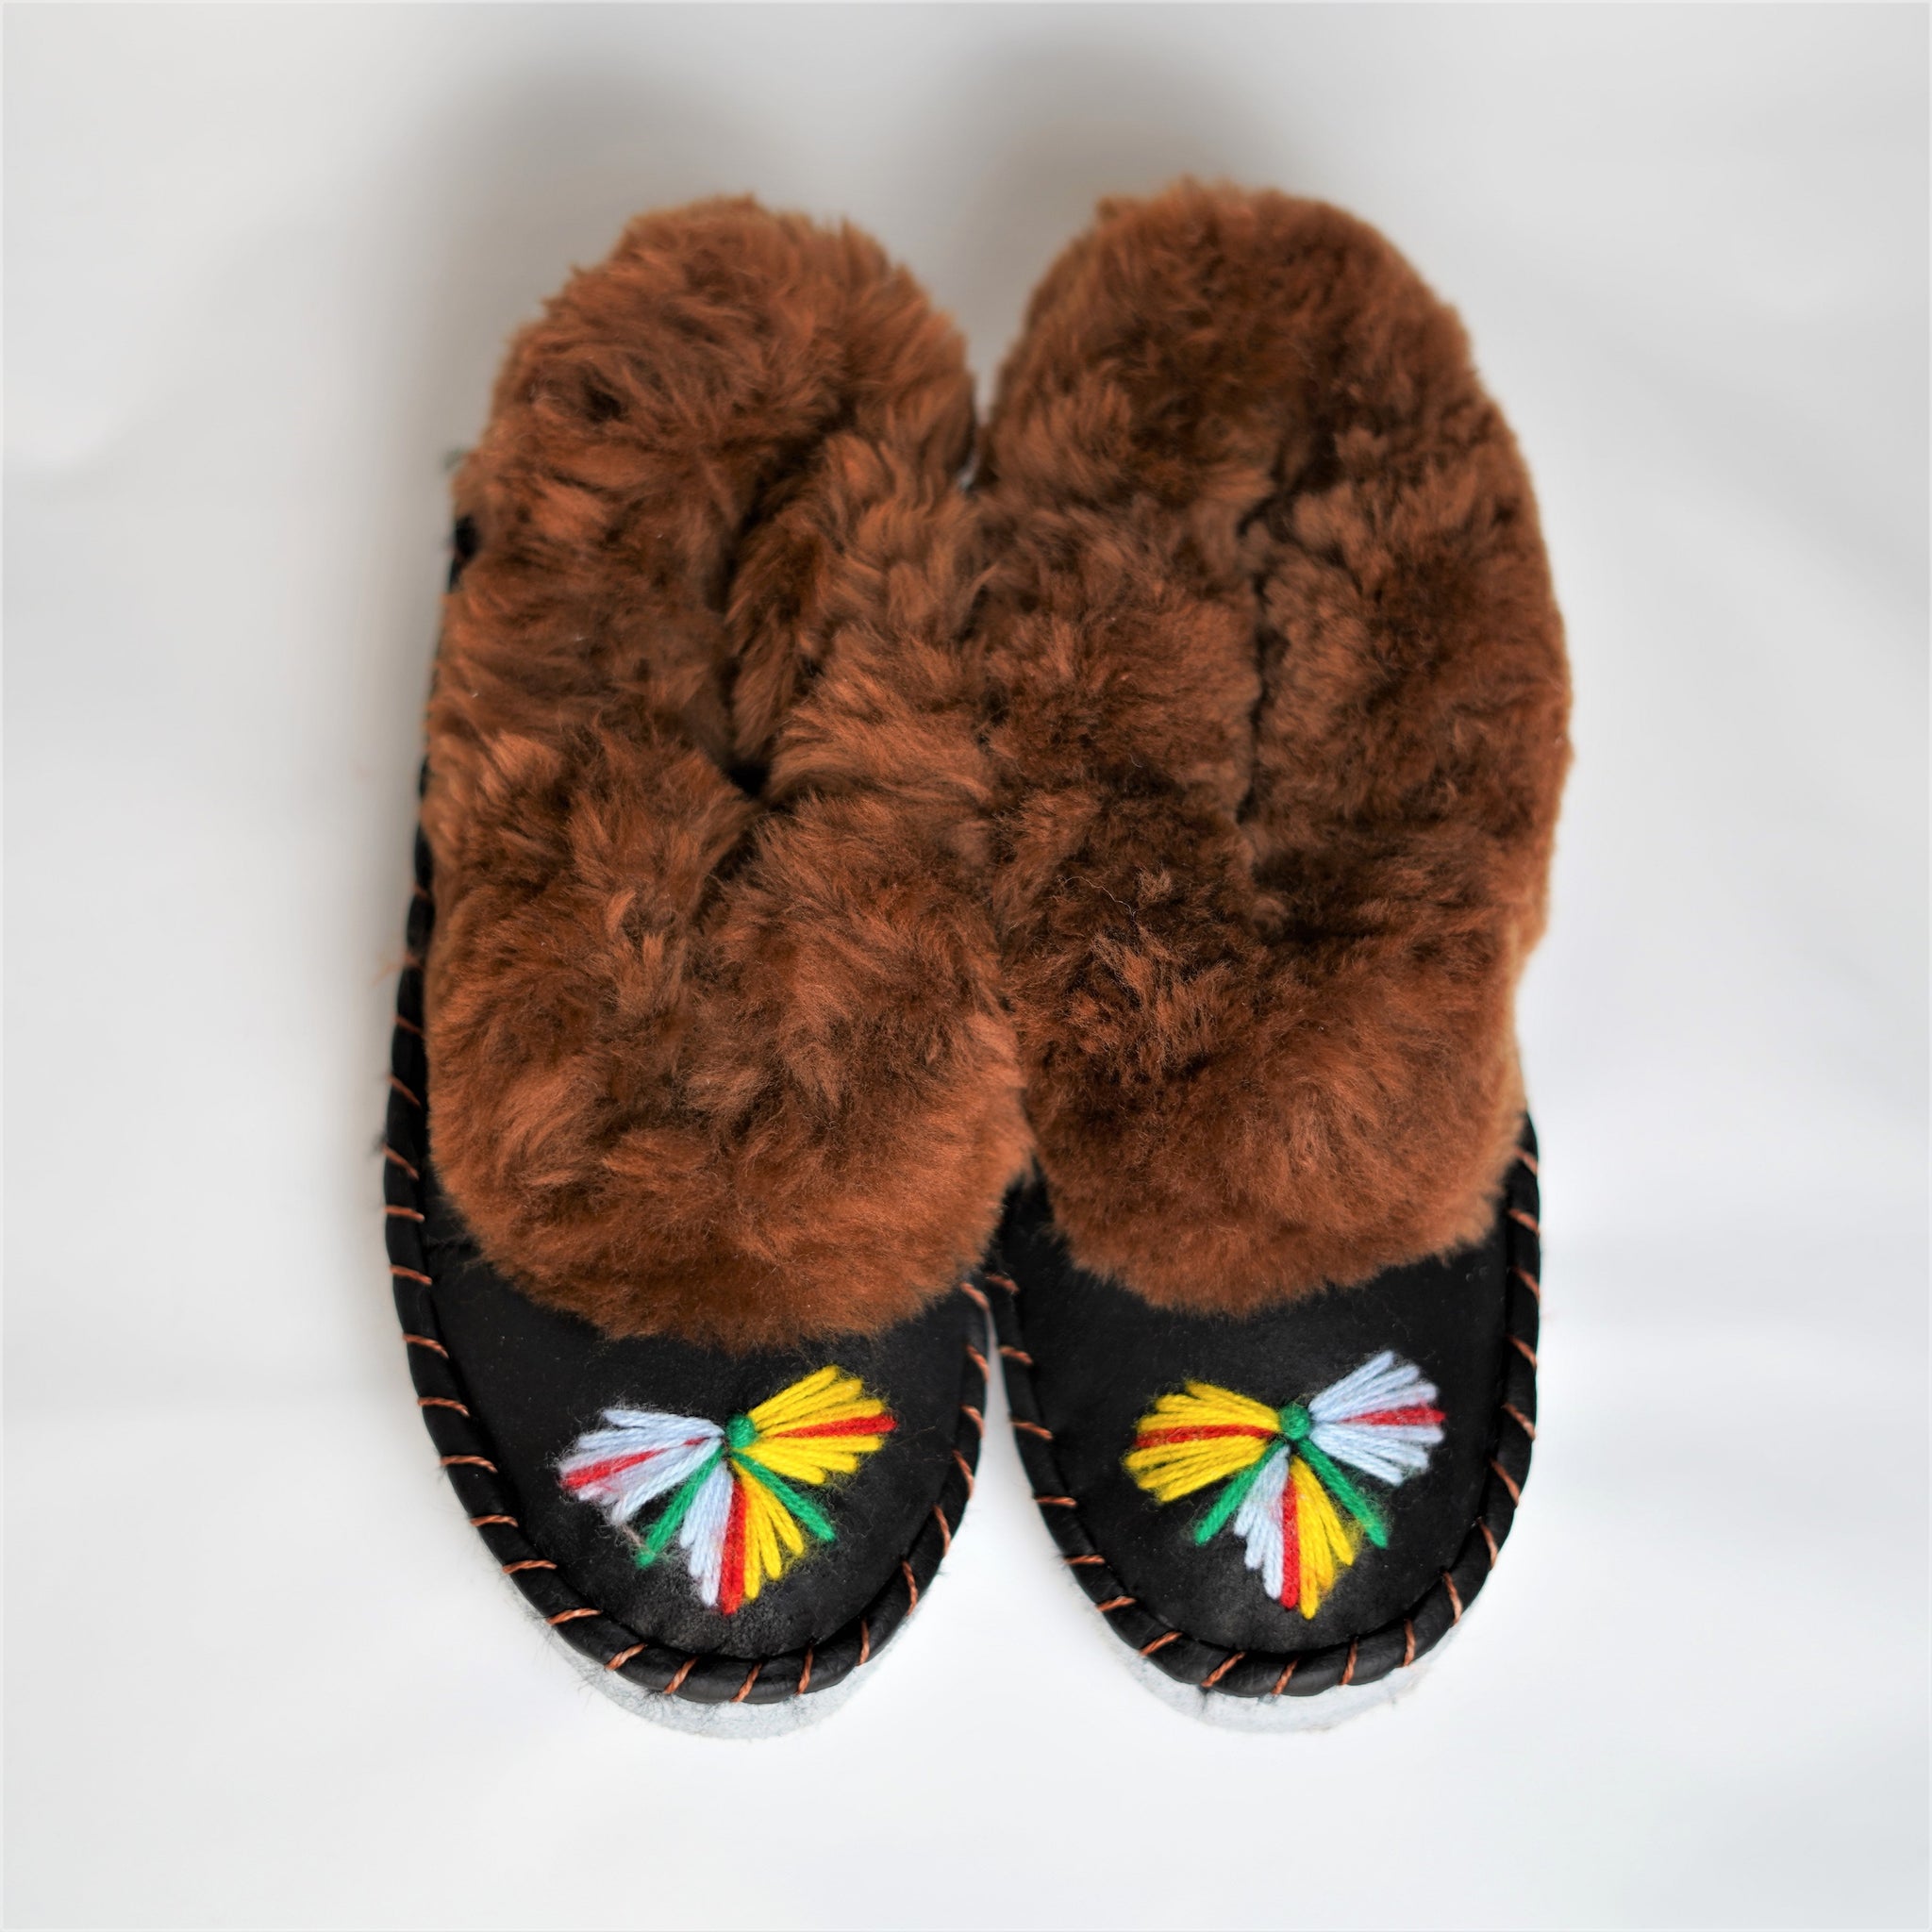 polish sheepskin slippers